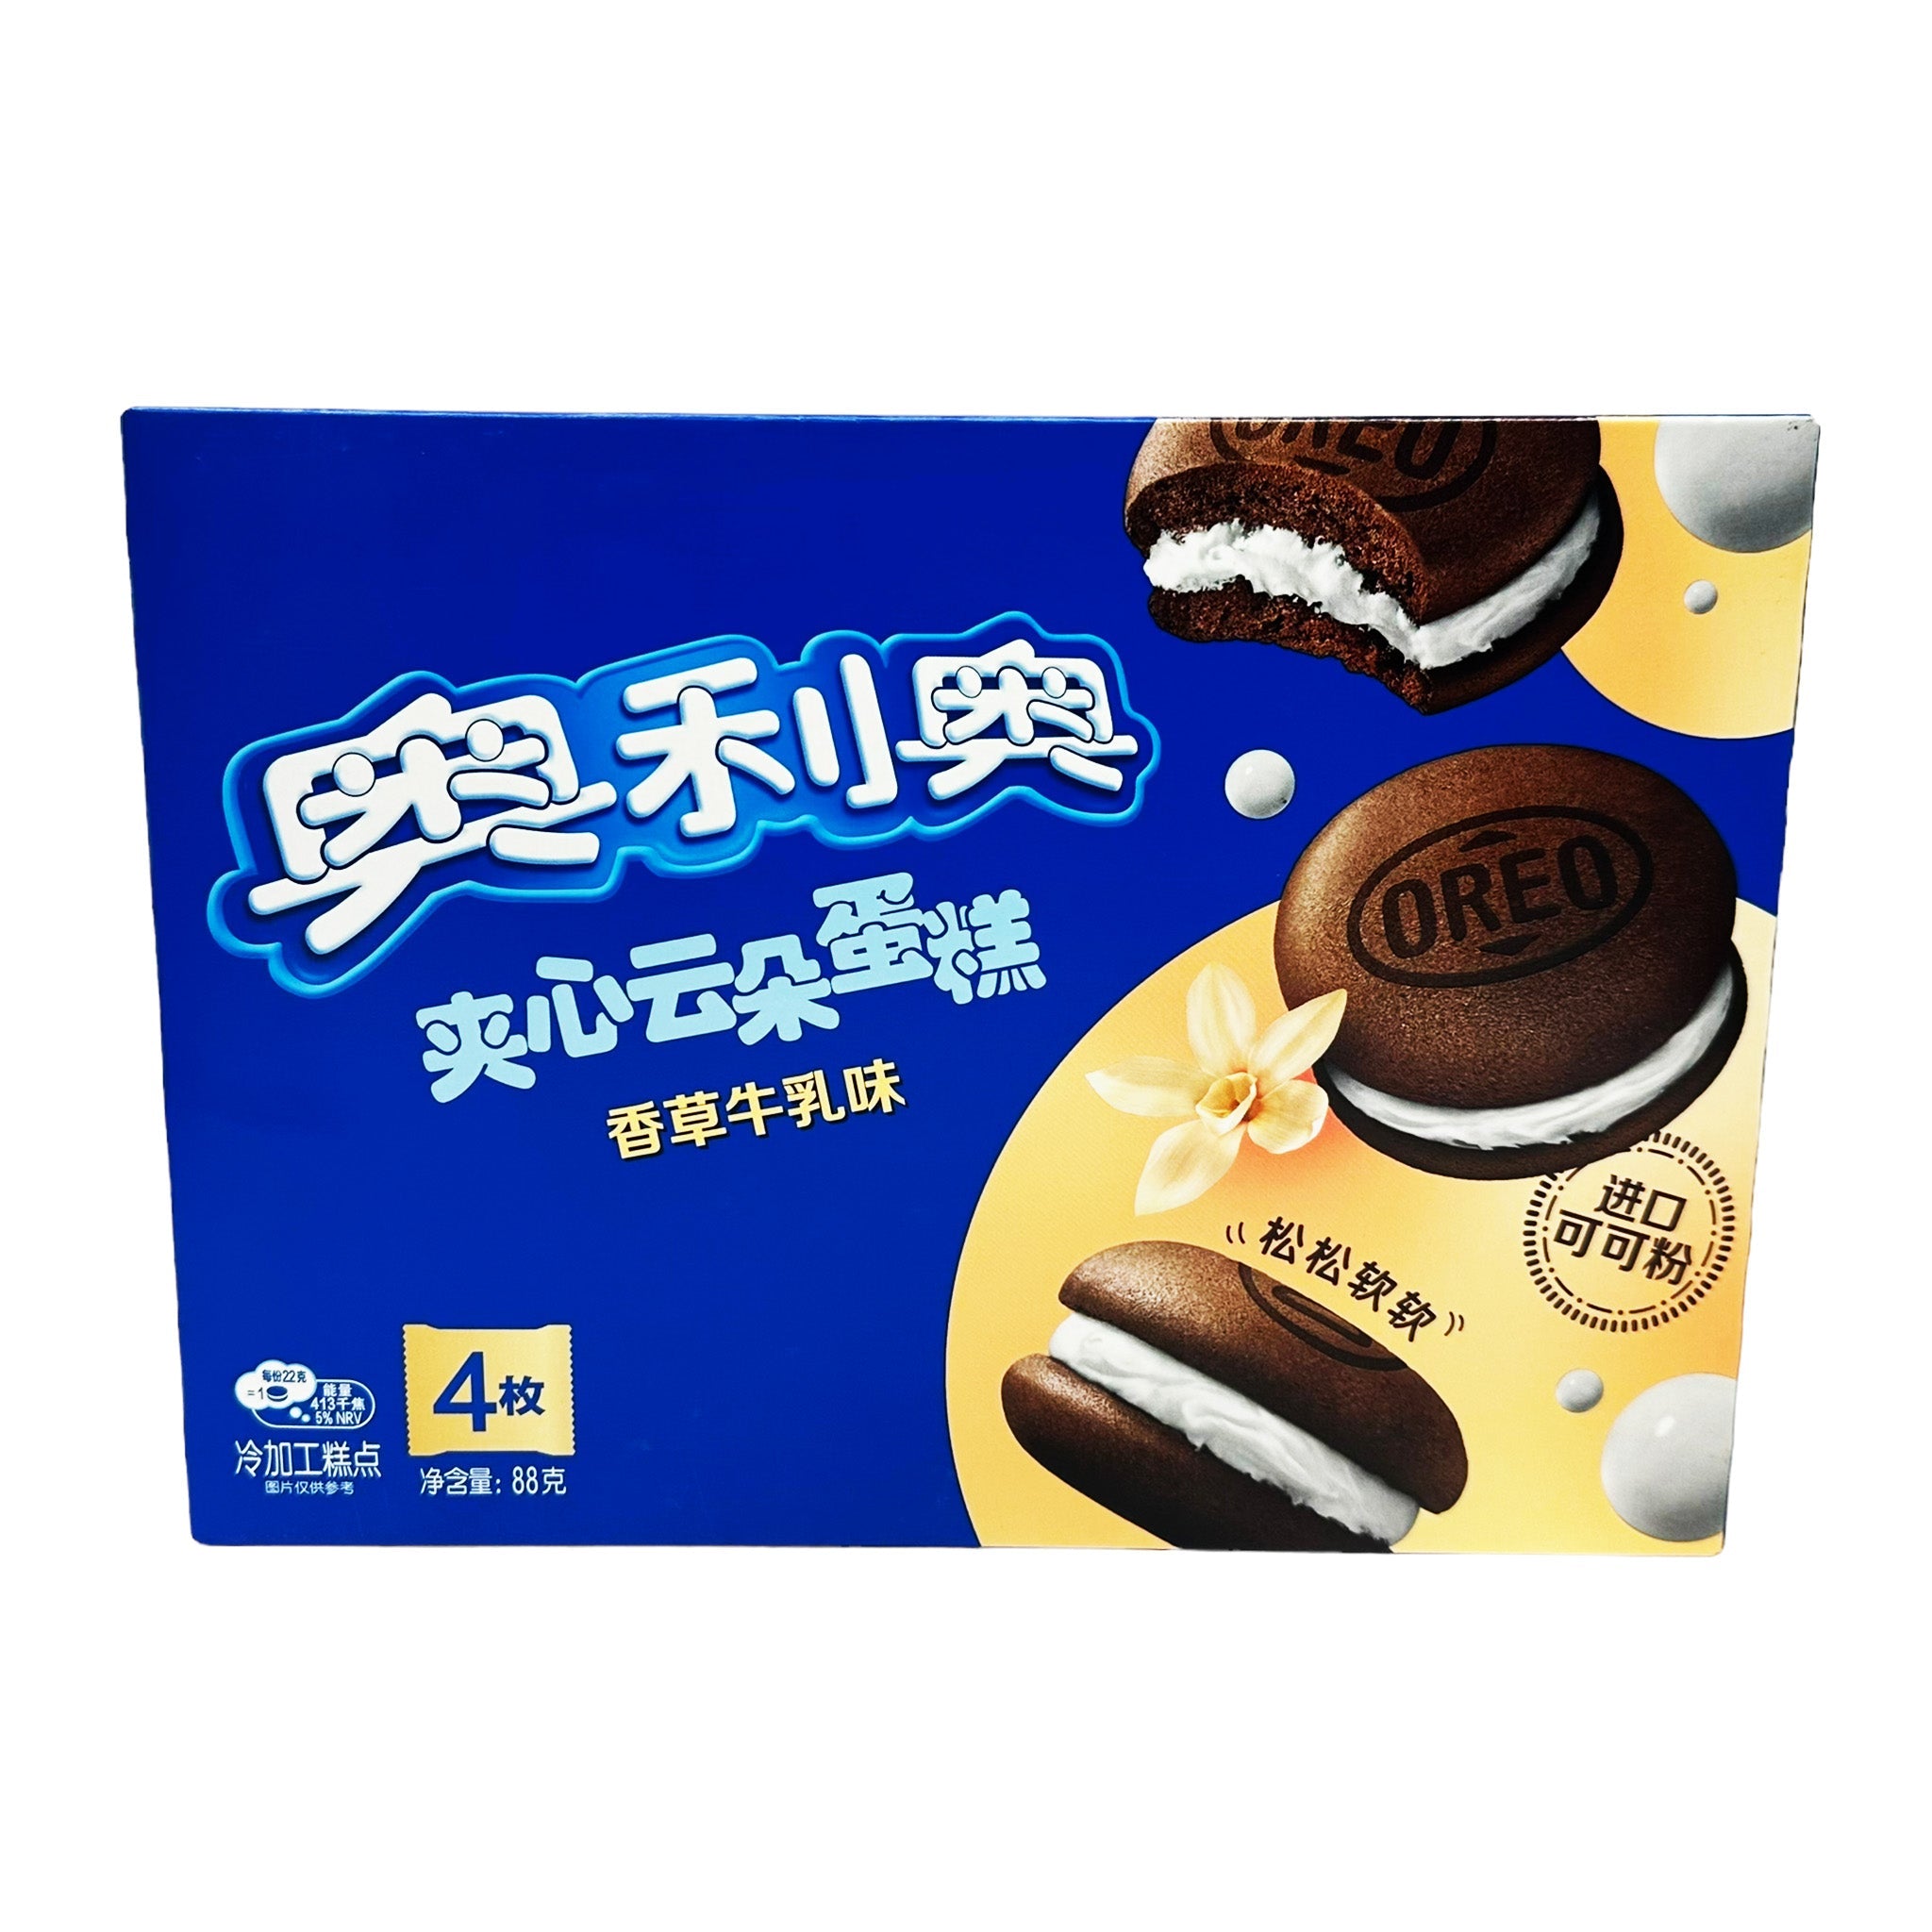 Oreo Vanilla Pudding Cakes - Taiwan (16 Count)